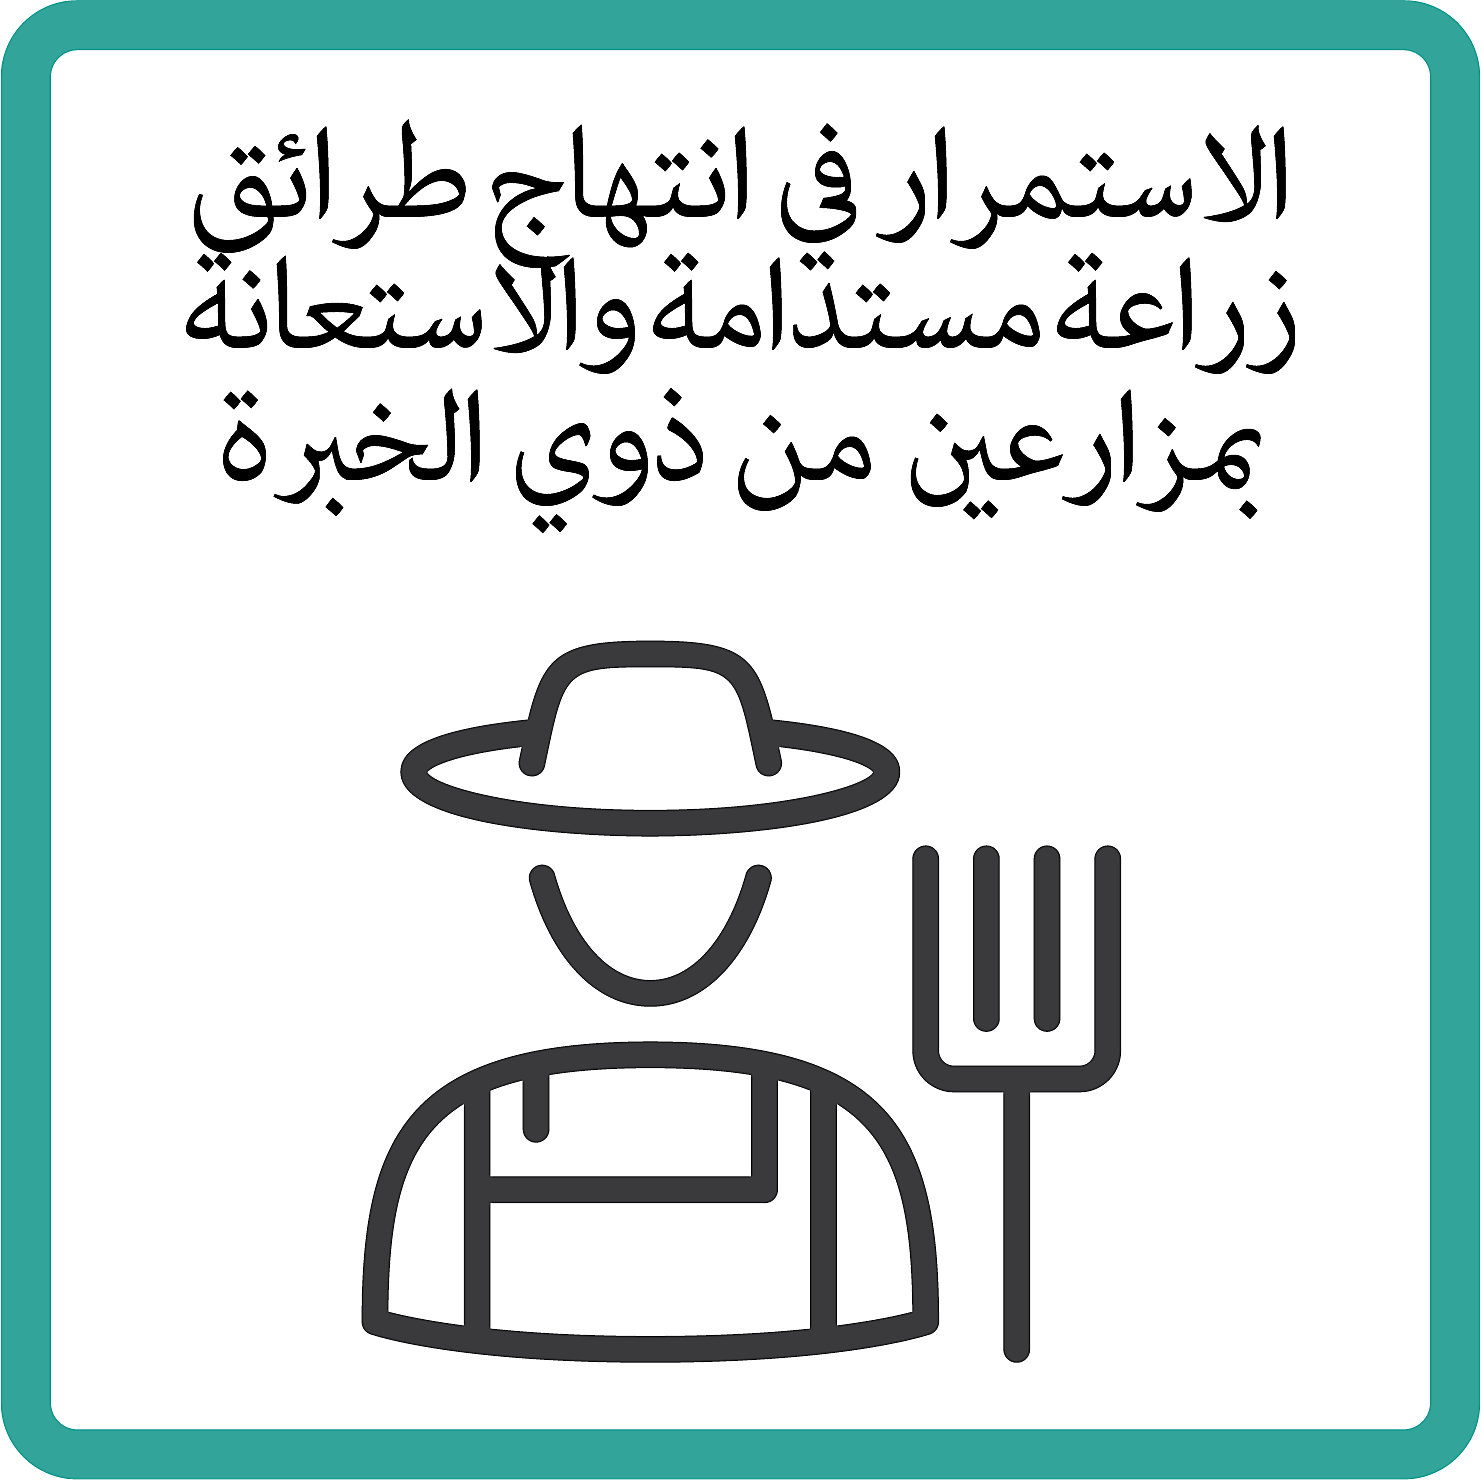 Sustainability farmers_BORDER_ARABIC